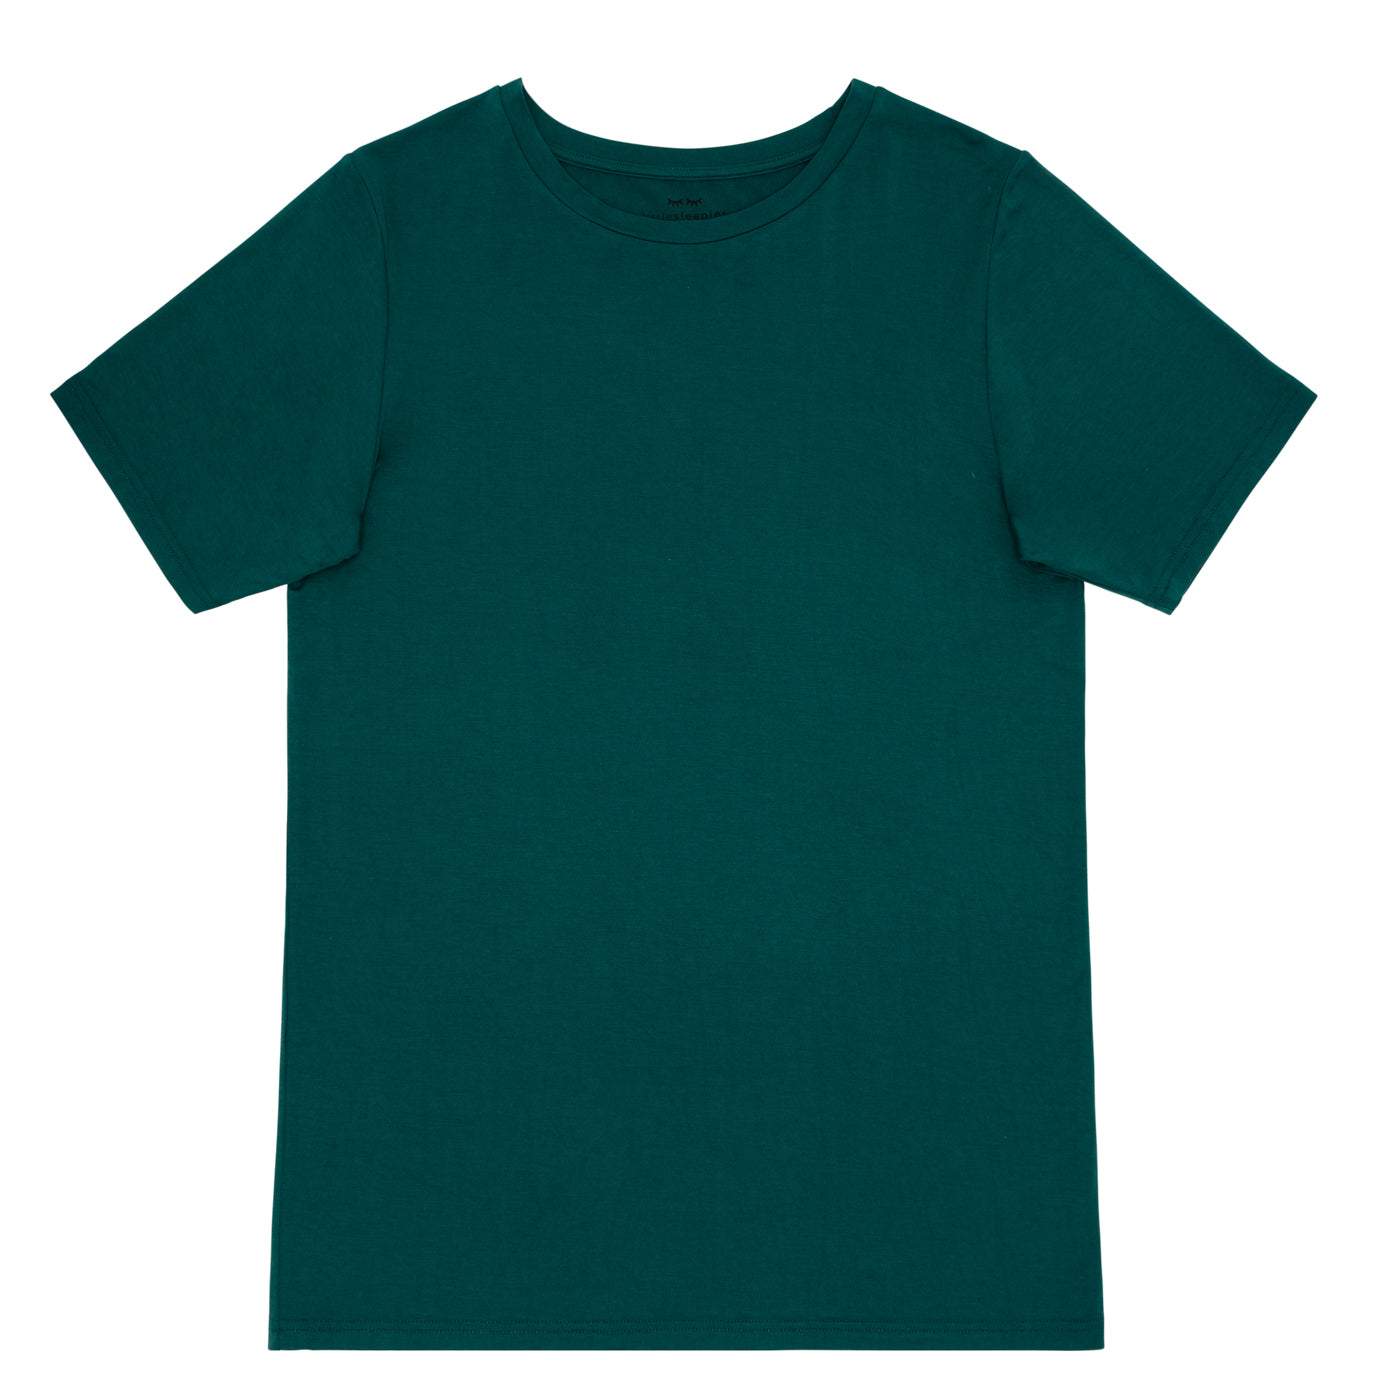 Flat lay image of an Emerald men's short sleeve pajama top